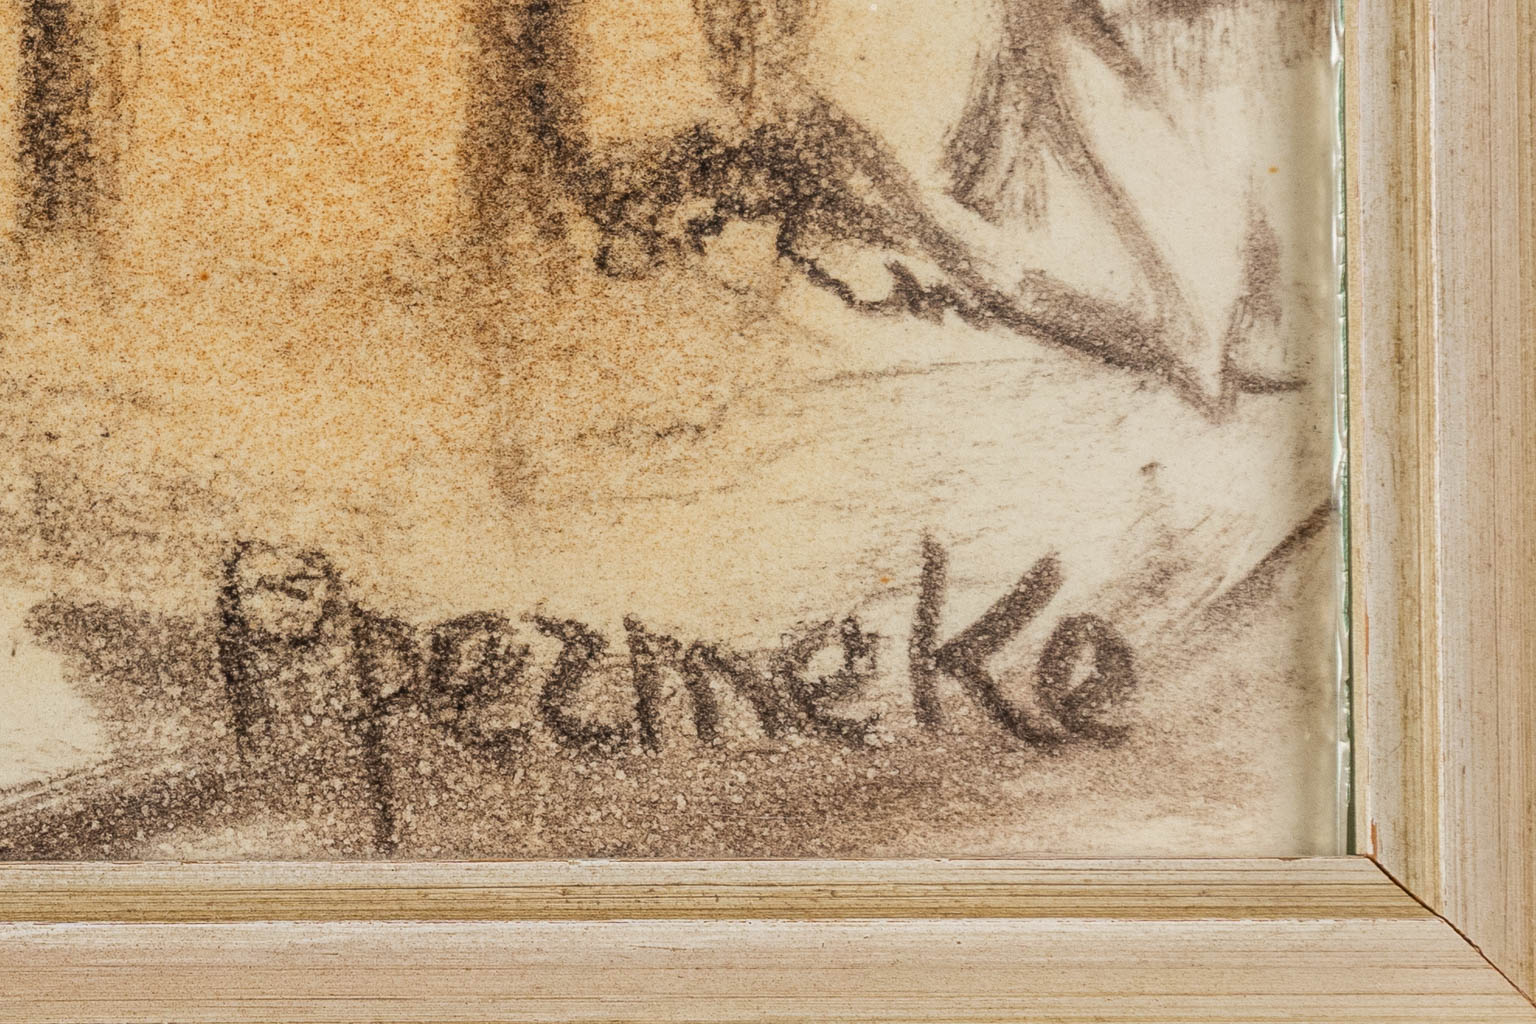 Paul PERMEKE (1918-1990) 'Three Drawings' charcoal on paper. (W:34 x H:24 cm)